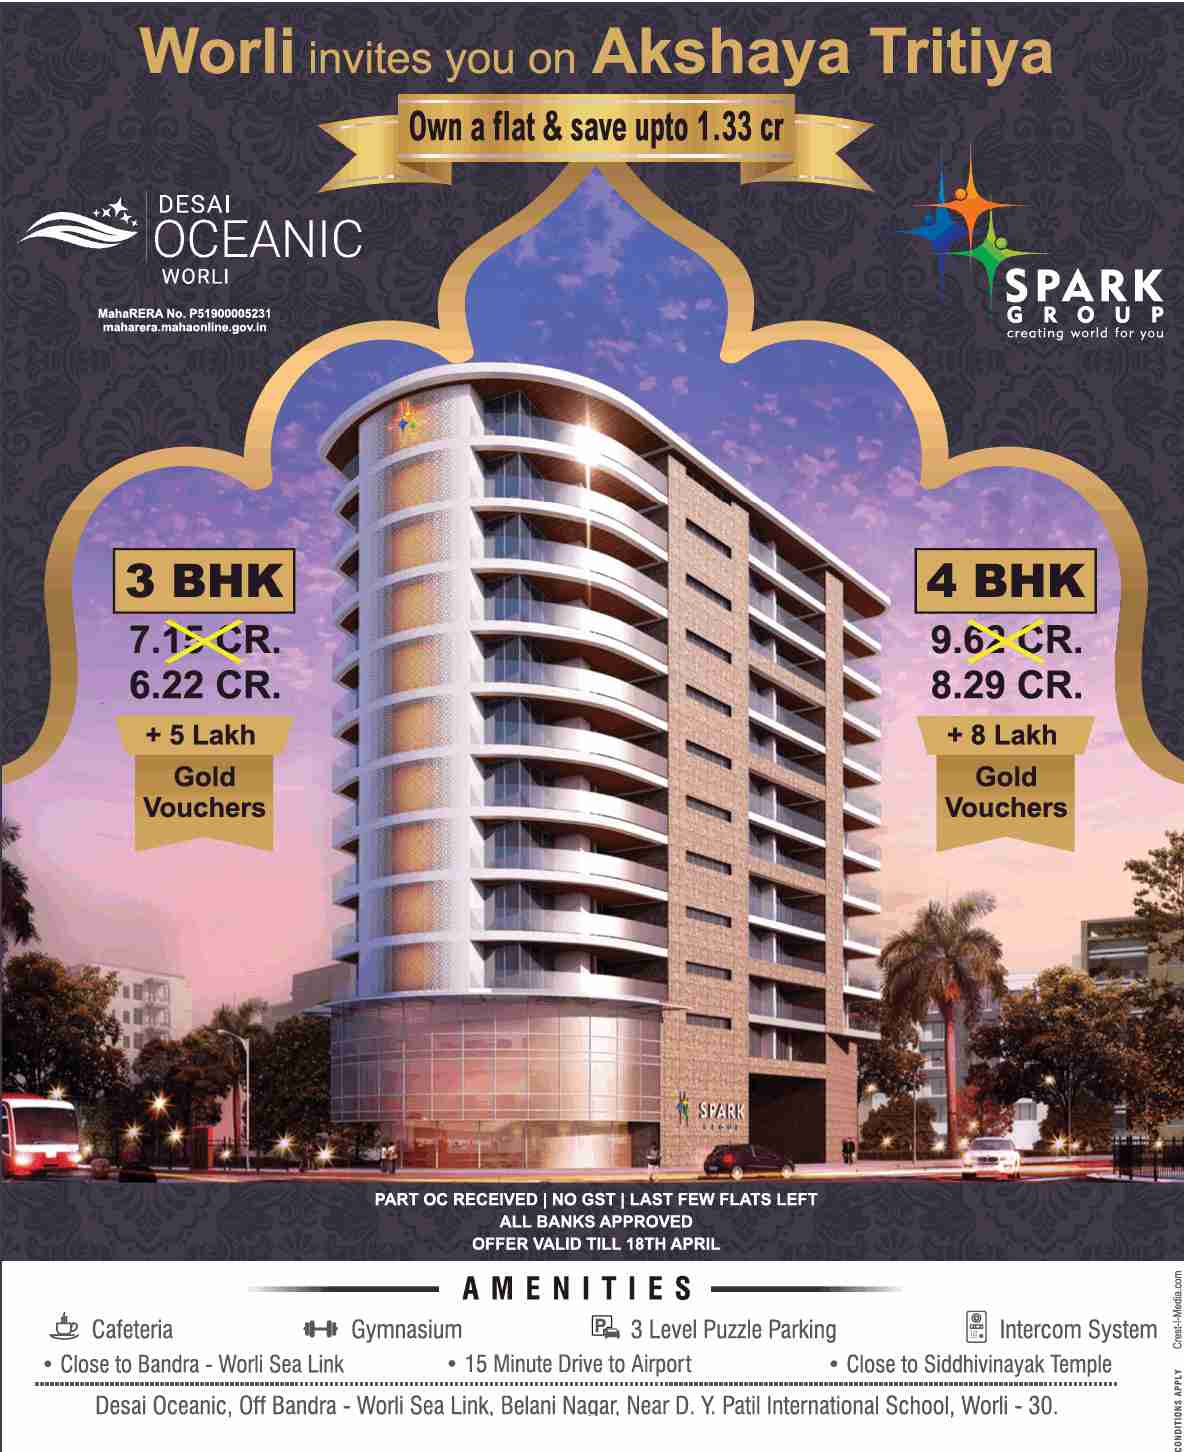 Own a flat & save up to Rs. 1.33 cr during Akshaya Tritiya Offer at Spark Desai Oceanic in Mumbai Update